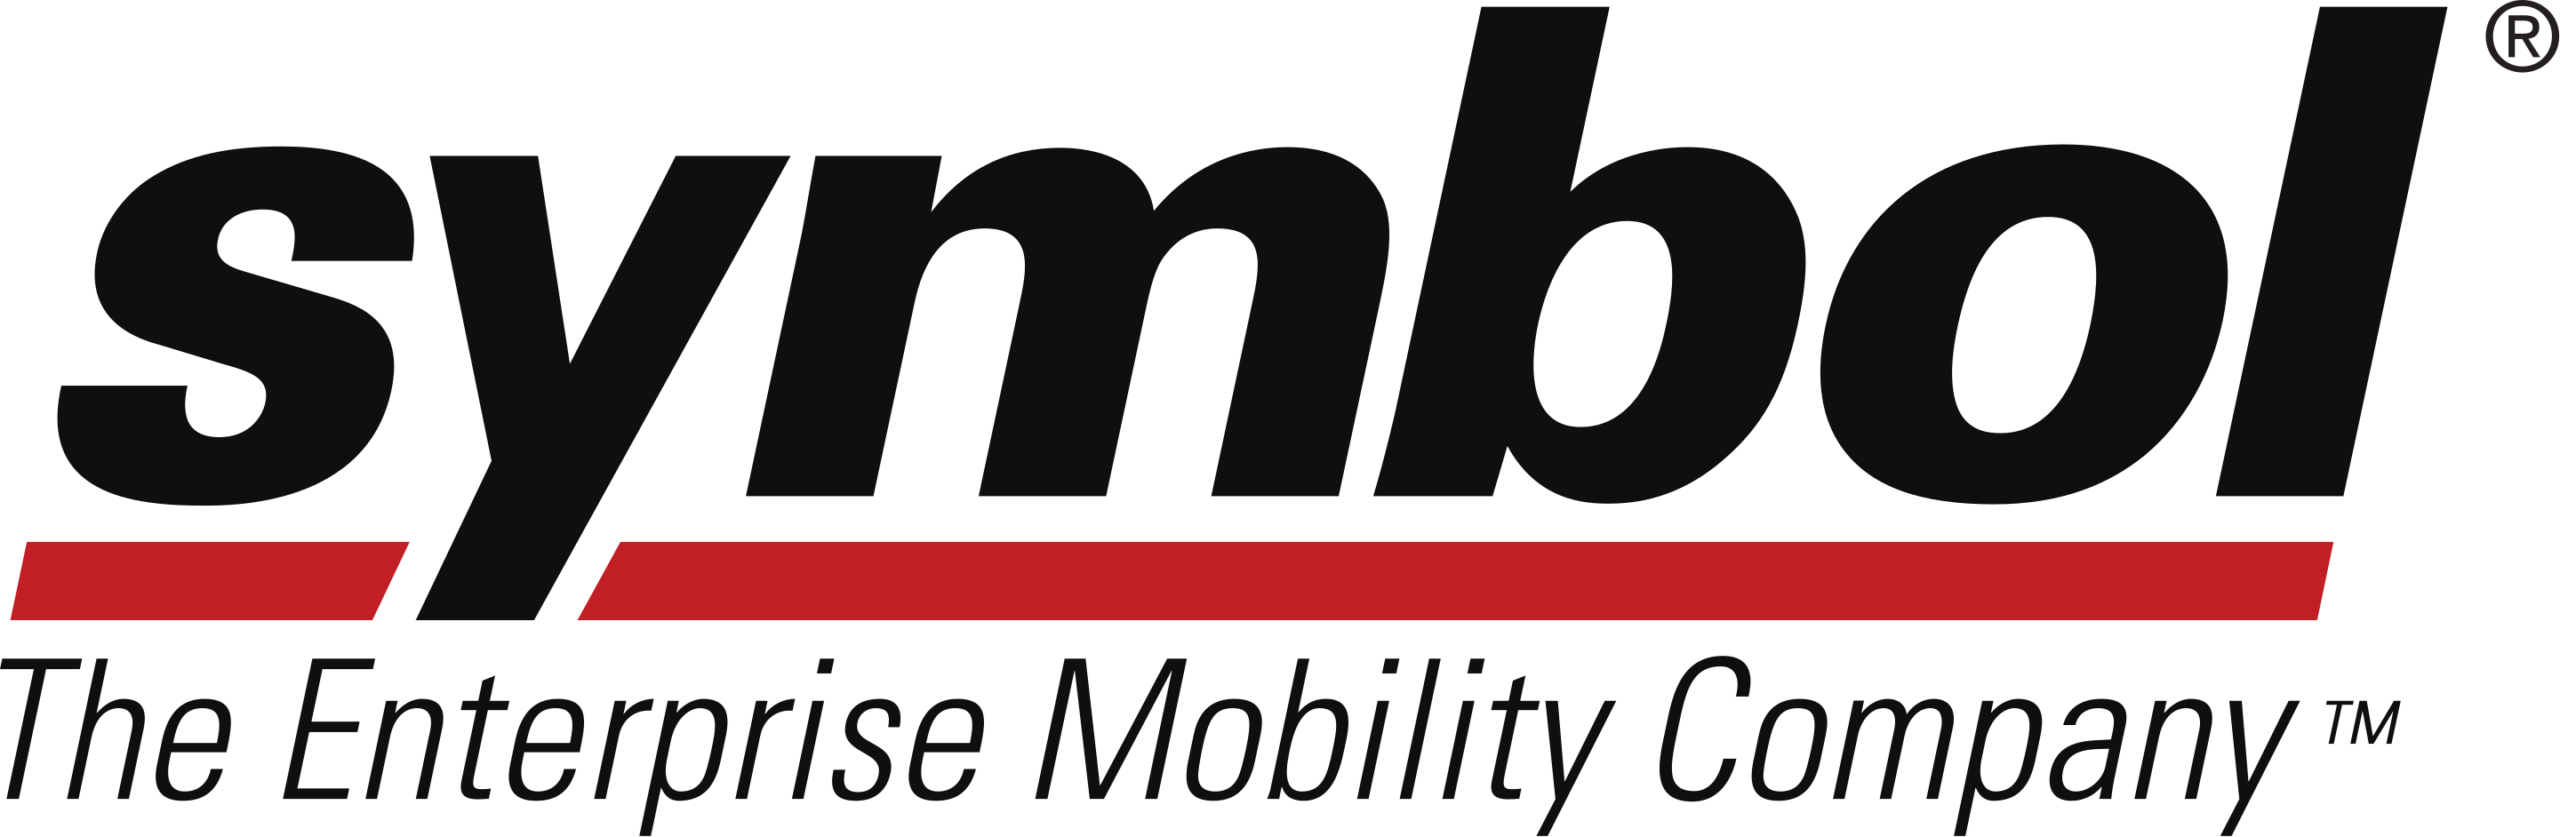 Symbol Enterprise Mobility Company